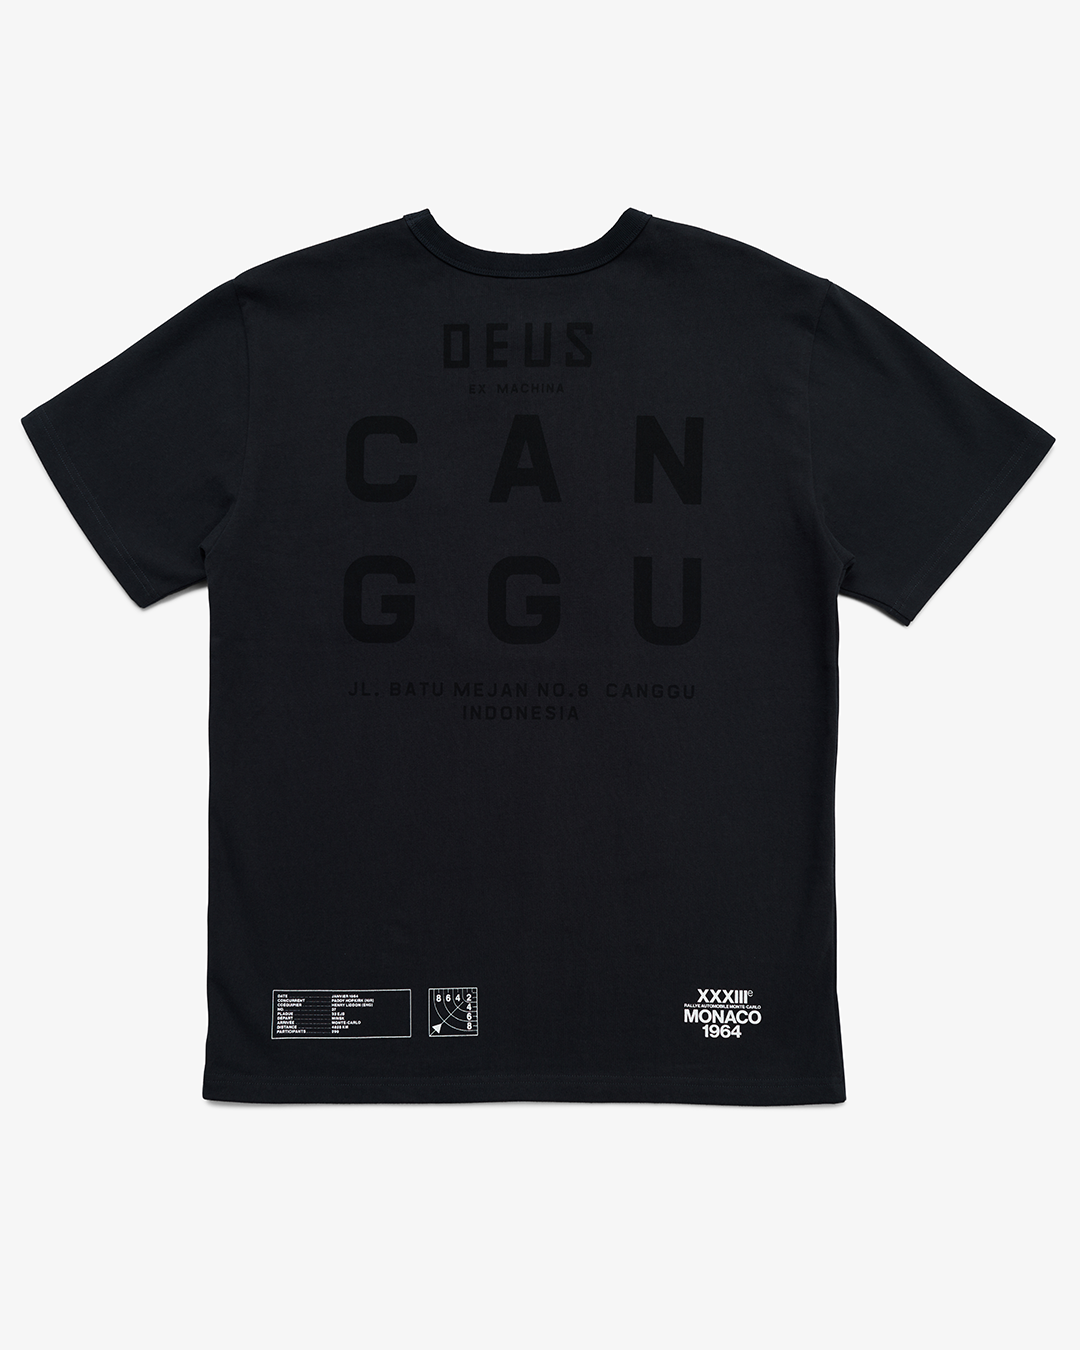 Deus Ex Machina Canggu Address T-Shirt Anthracite